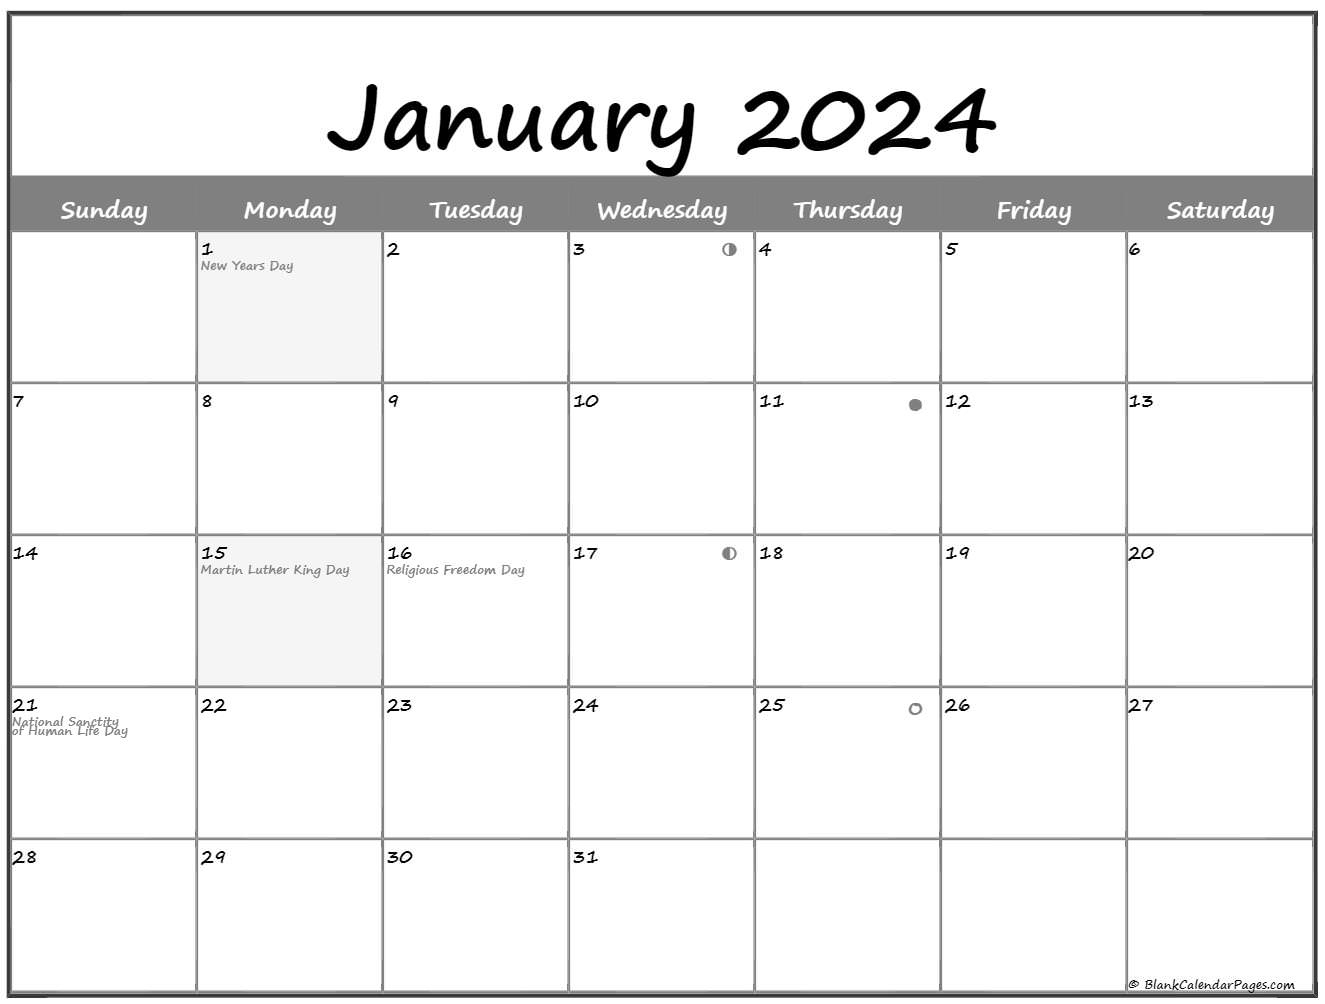 January 2024 Lunar Calendar Moon Phase Calendar - Free Printable 2024 Moon Calendar